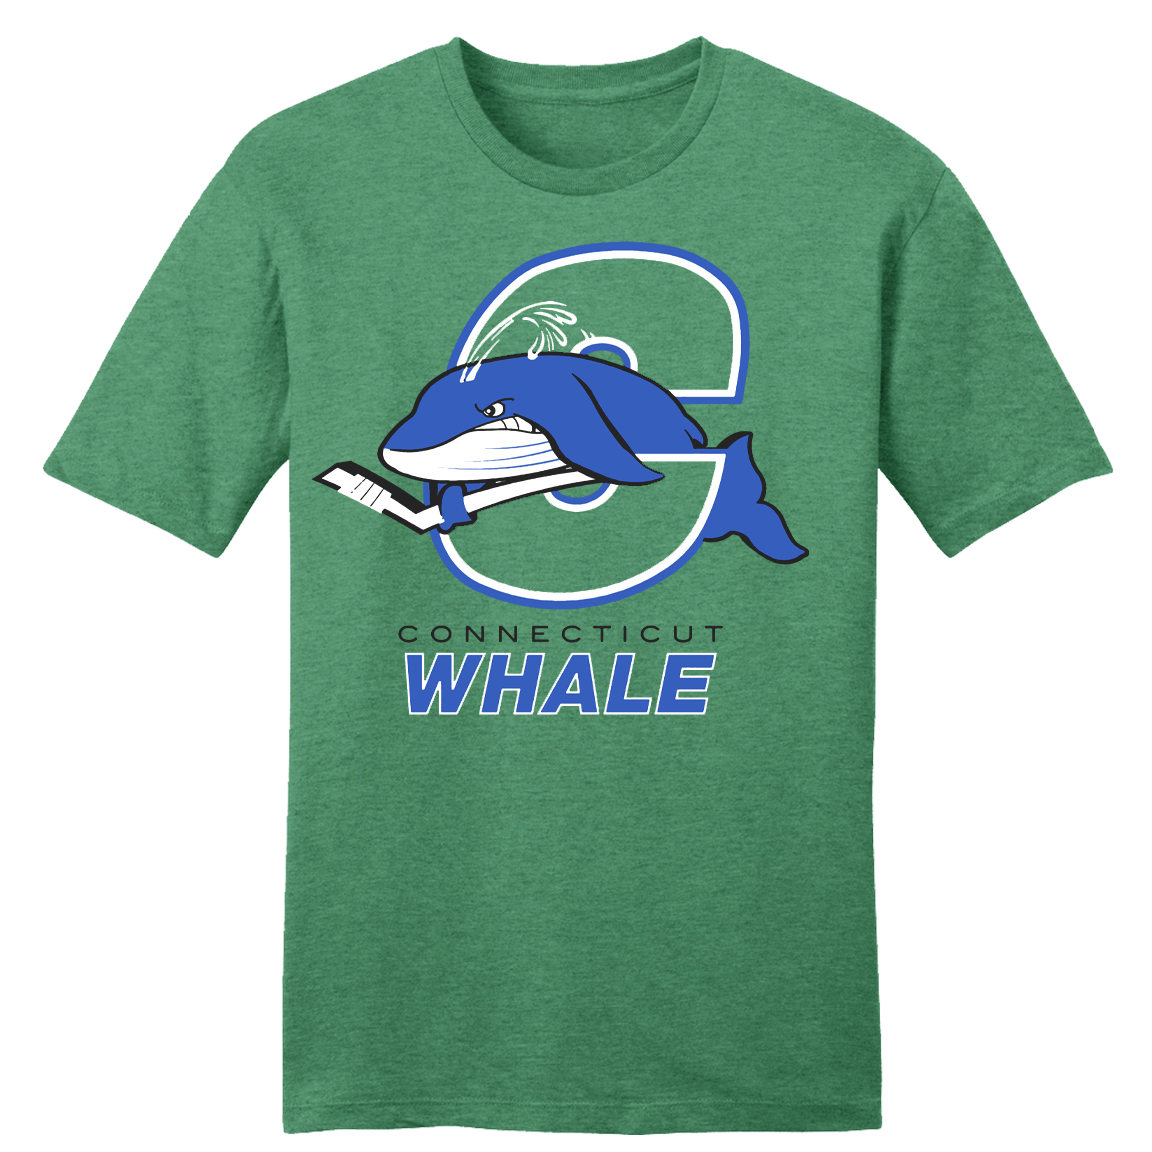 The Connecticut Whale Hockey tee